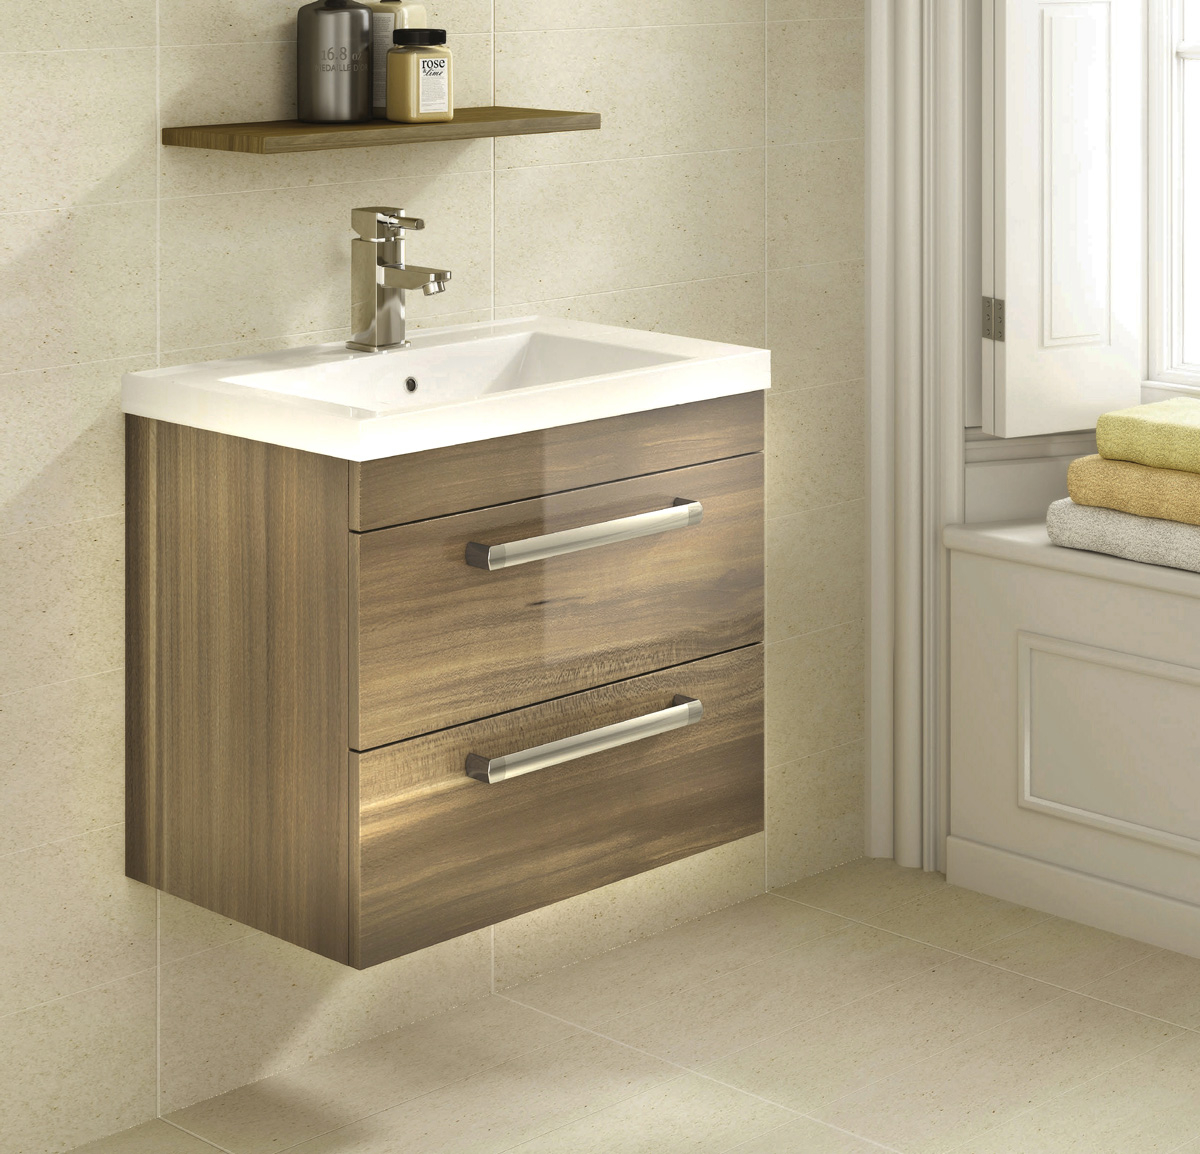 Gloss Wood Effect Bathroom Furniture in dimensions 1200 X 1154